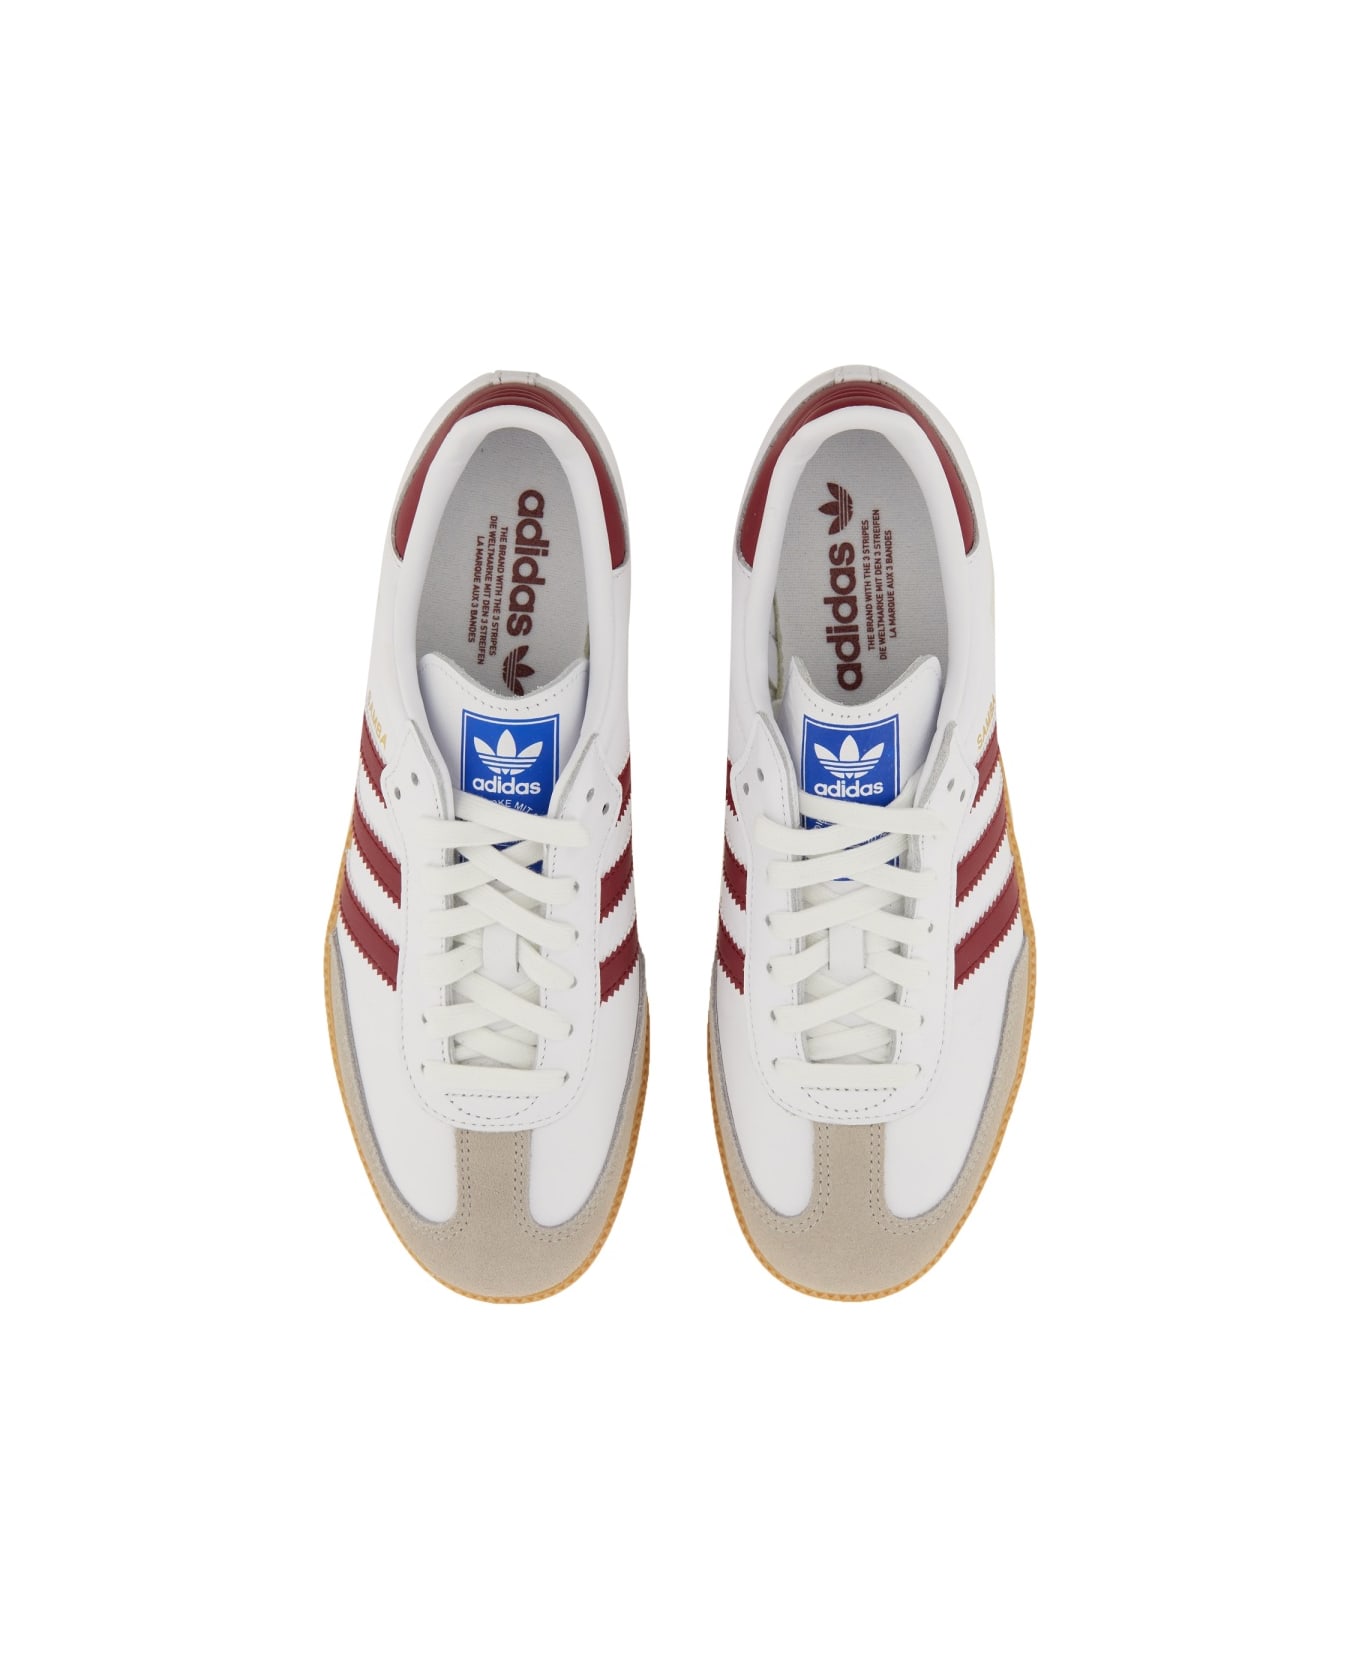 Adidas Originals Samba Sneaker. - Ftwwhtcburgugum3 スニーカー